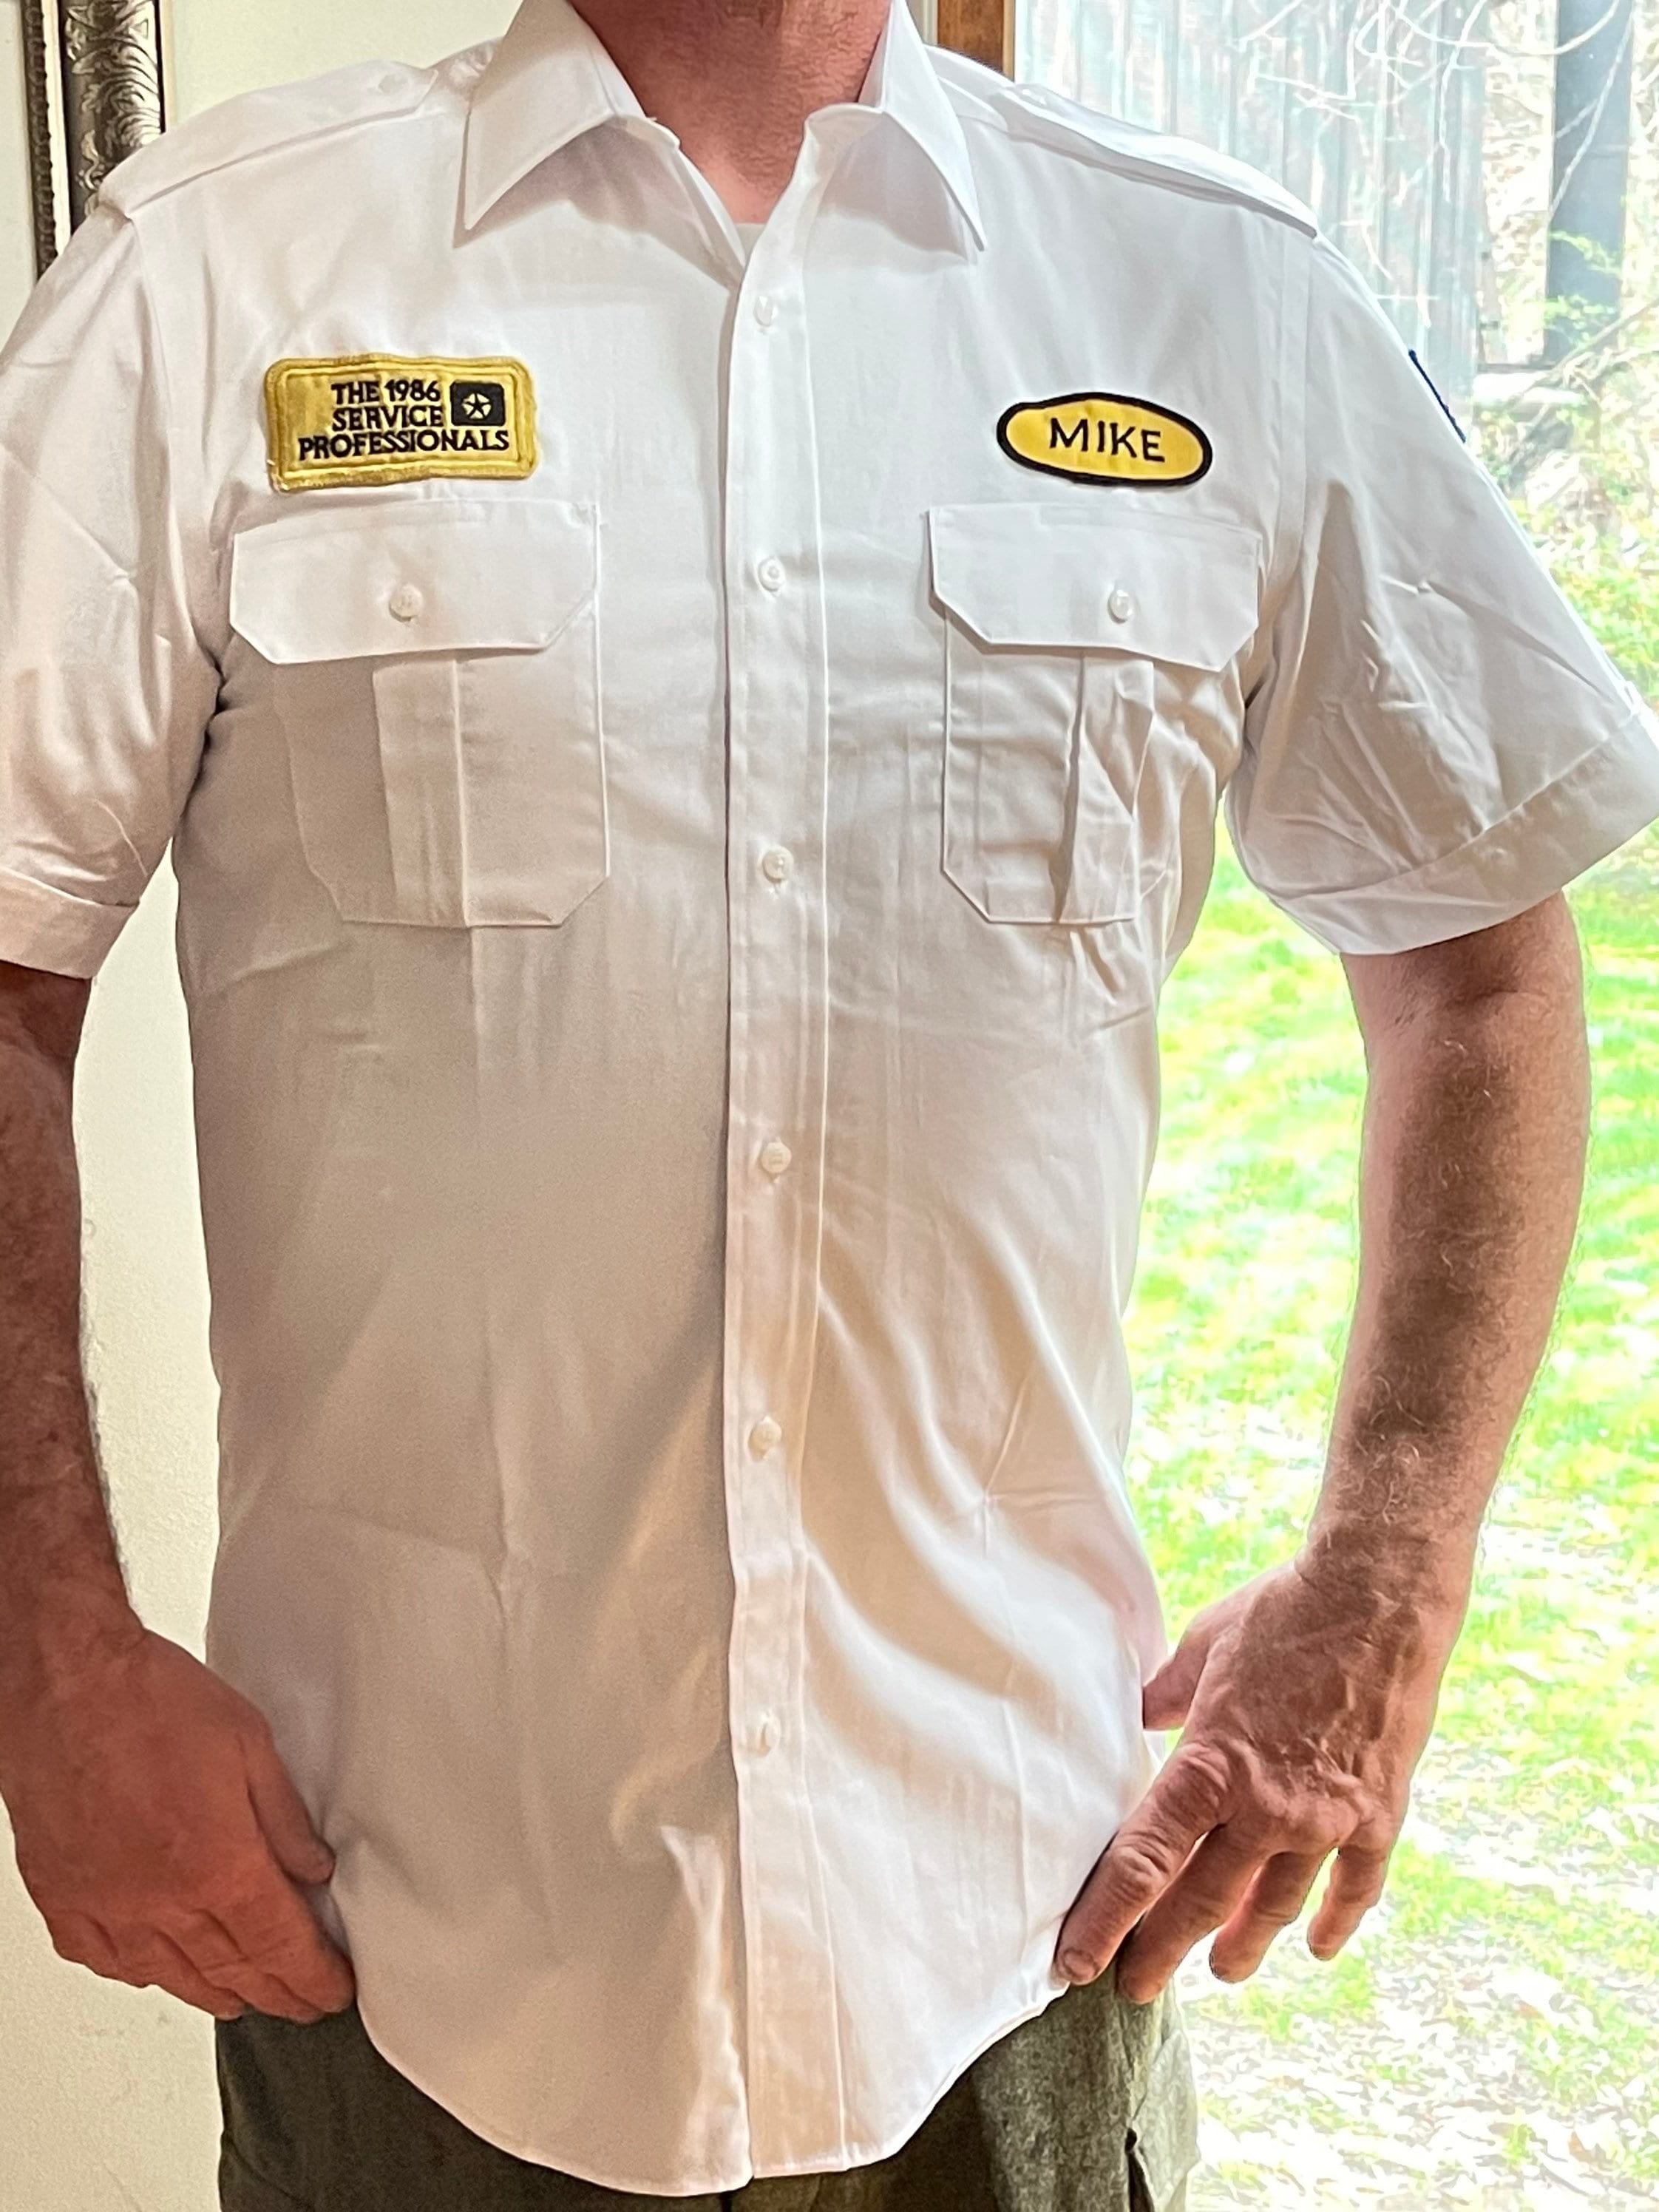 Vintage Work Shirt, Retro Mike Uniform Button Down, Car Cruise Shirt